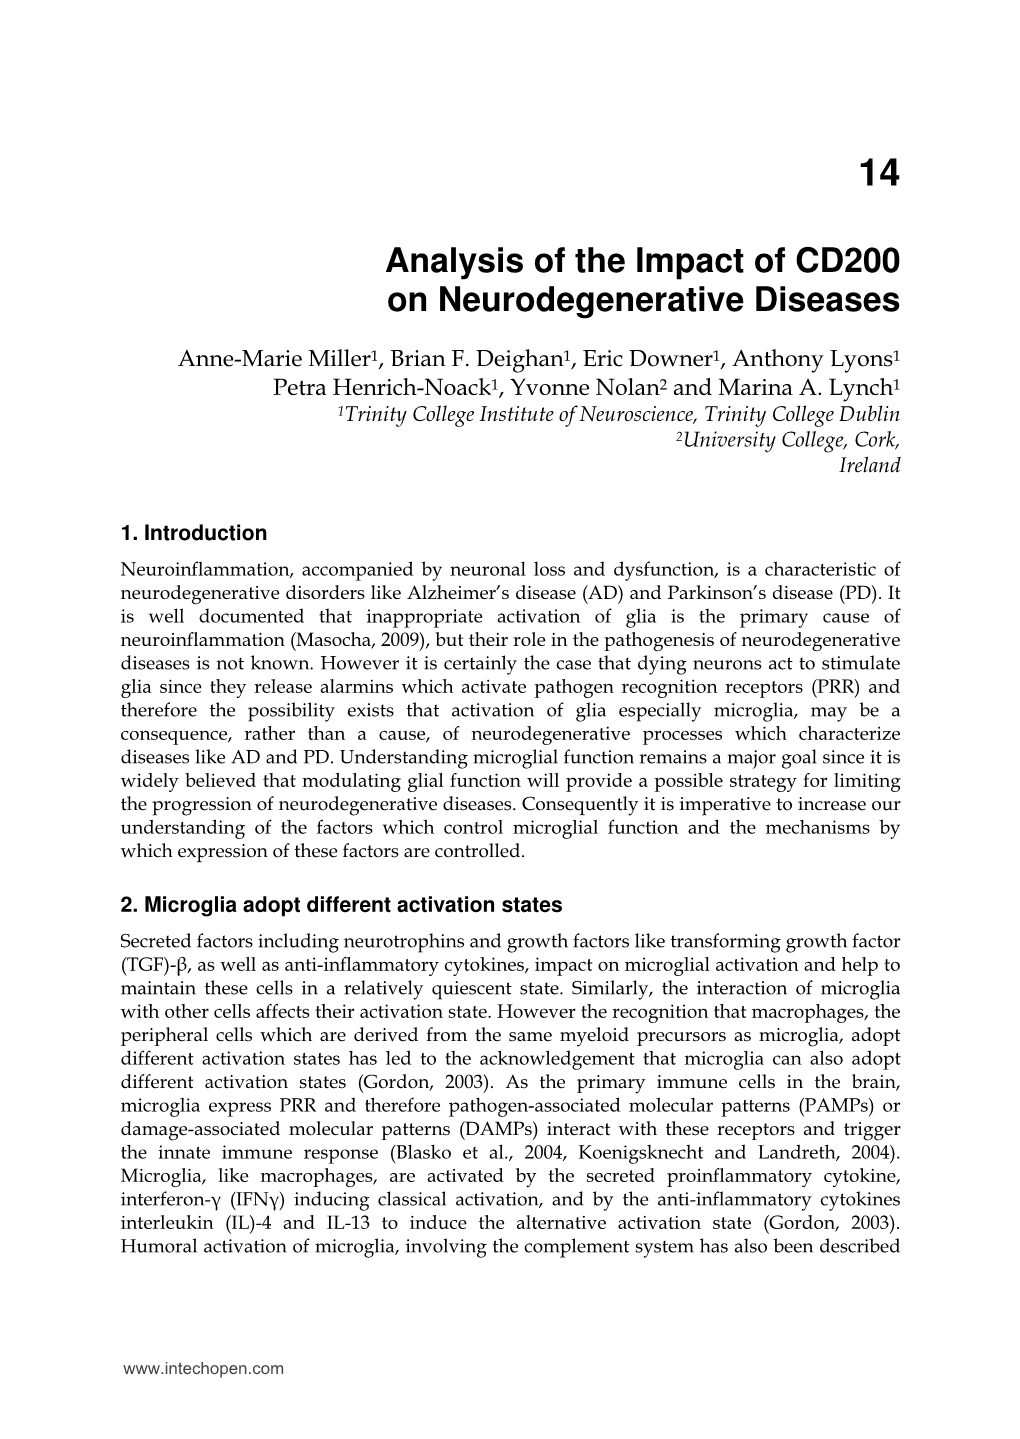 Analysis of the Impact of CD200 on Neurodegenerative Diseases